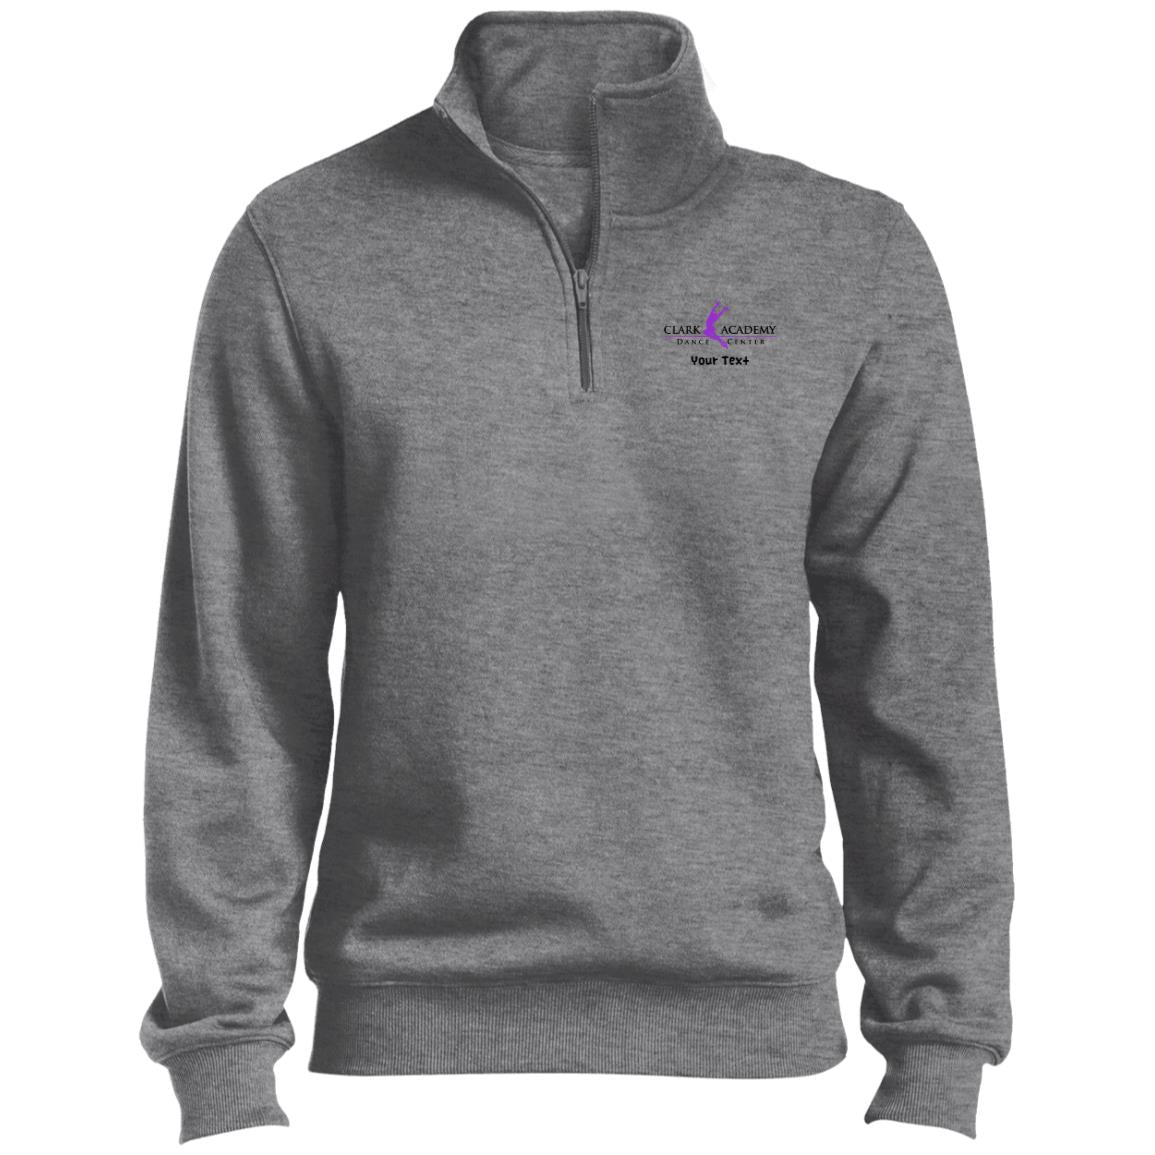 CADC 1/4 Zip Sweatshirt - With Personalization